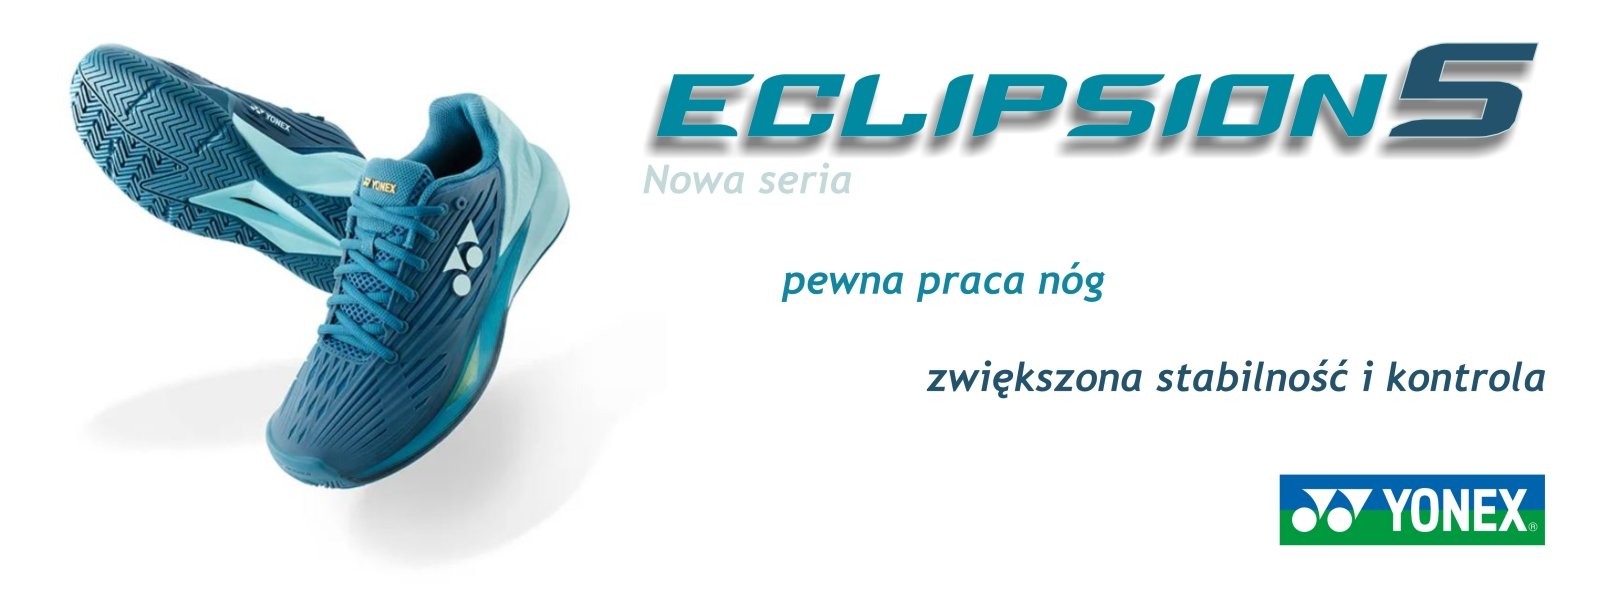  Eclipsion 5